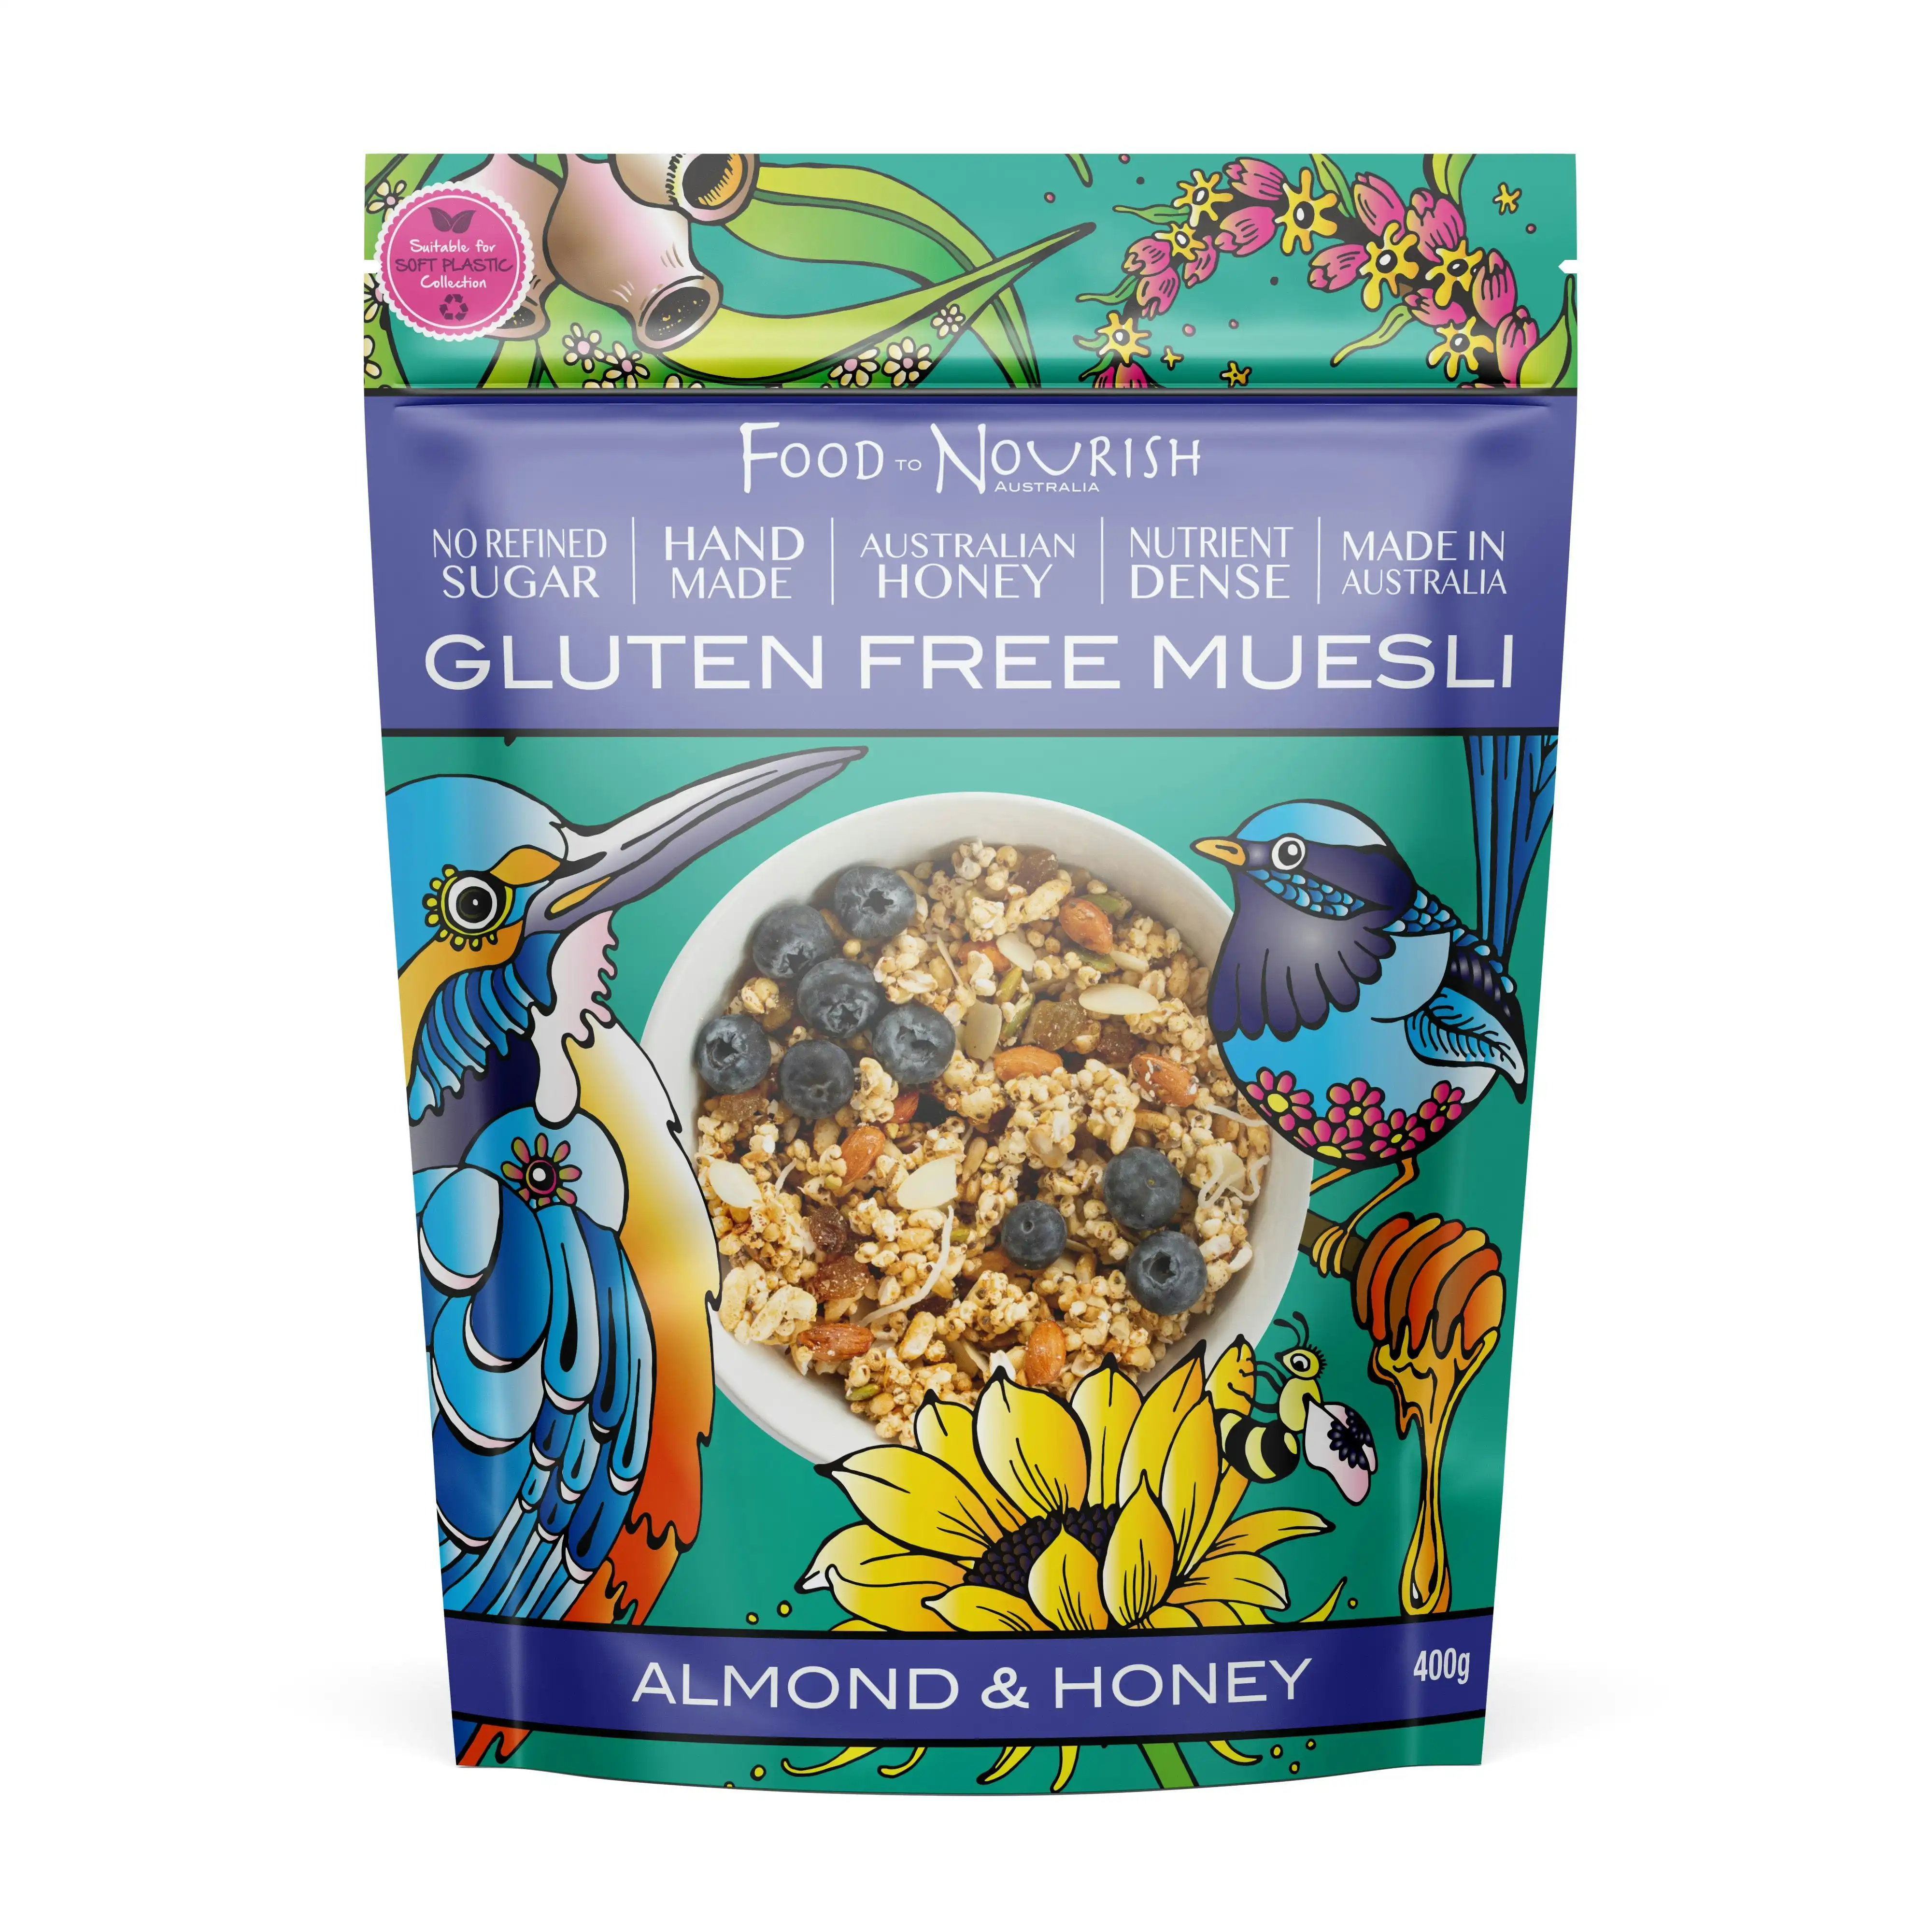 Food to Nourish GF Muesli Almond & Honey 600g